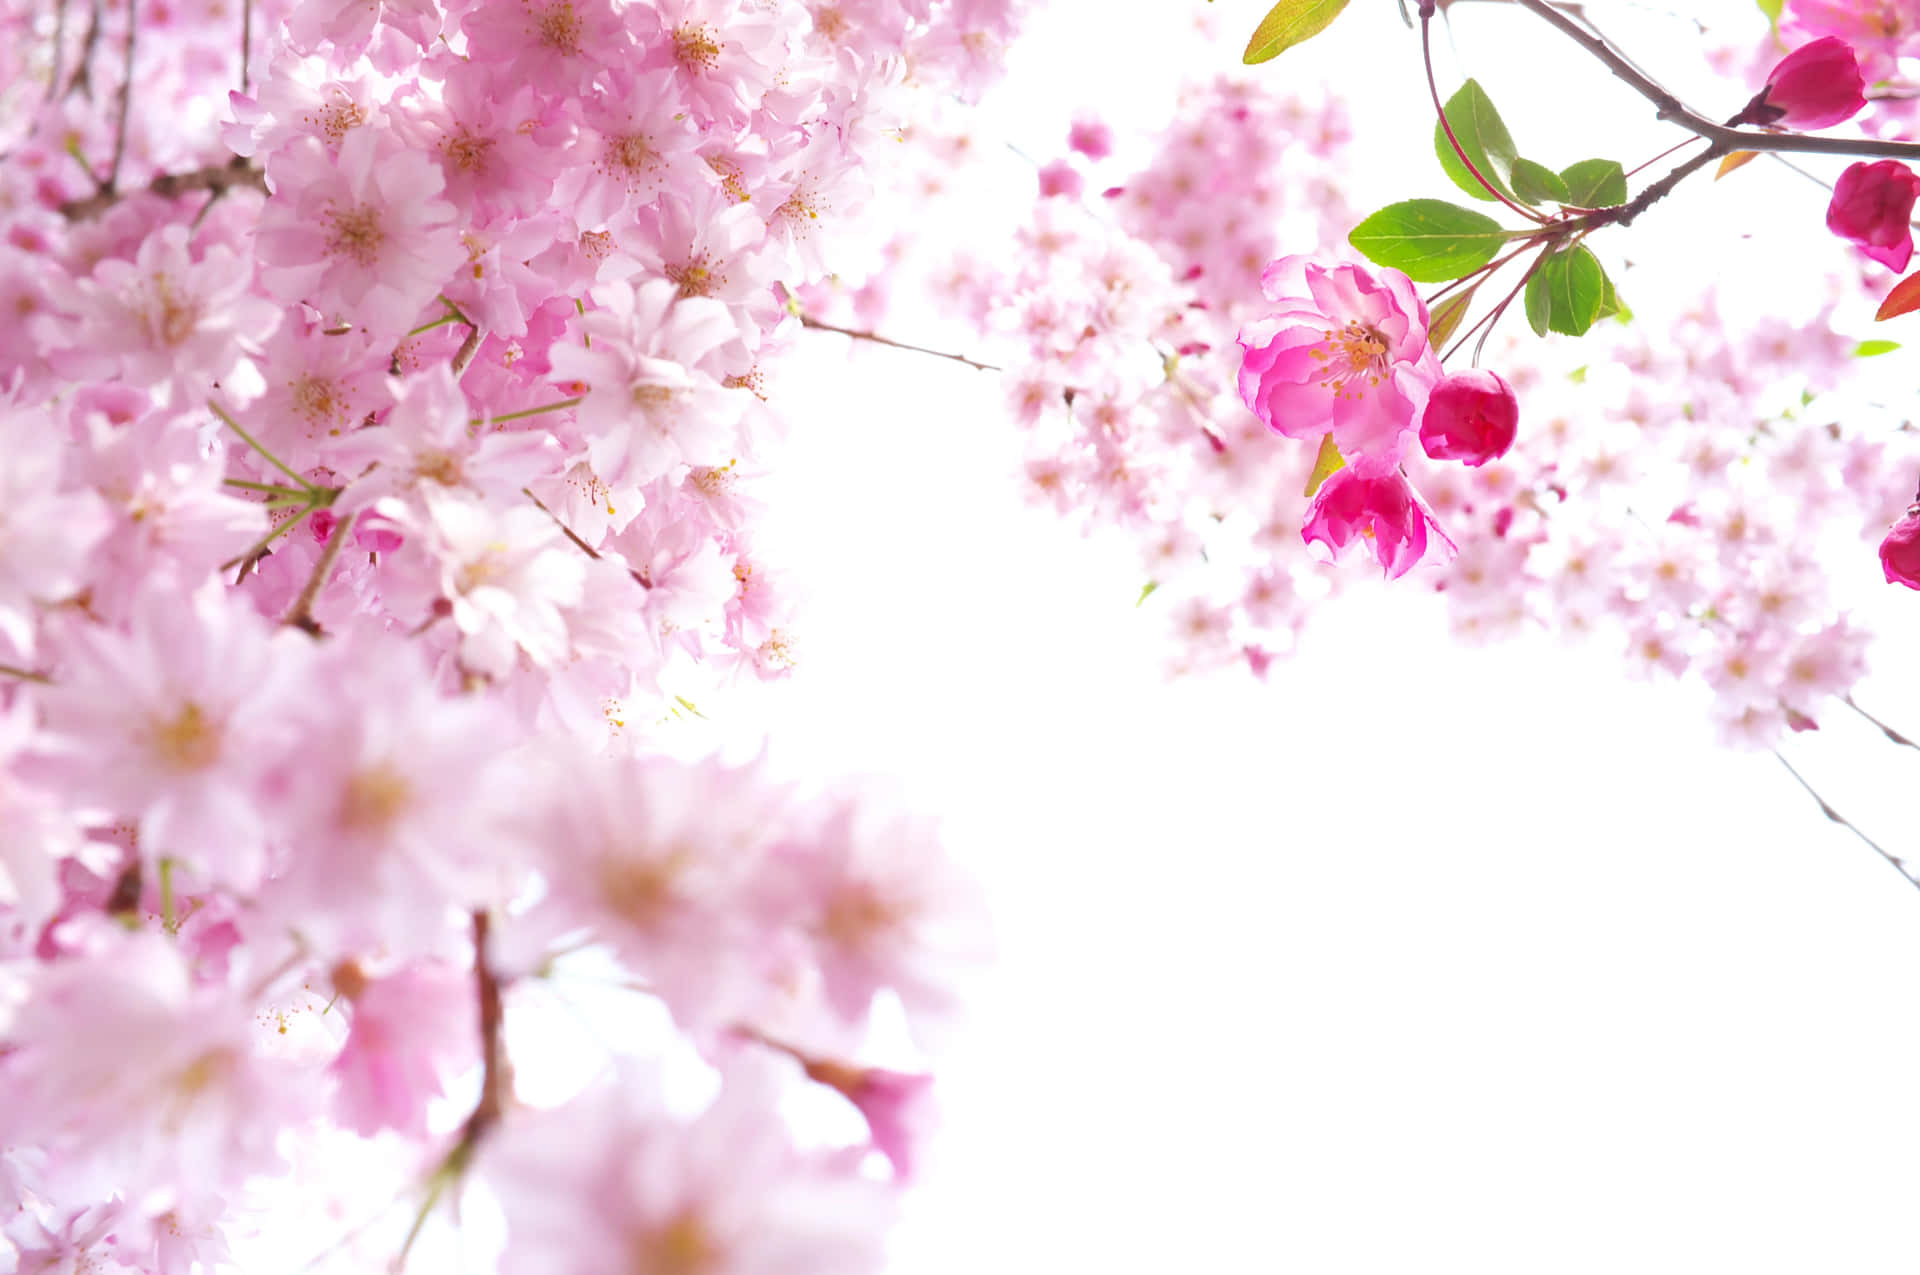 The Blooming Sakura Trees of Japan